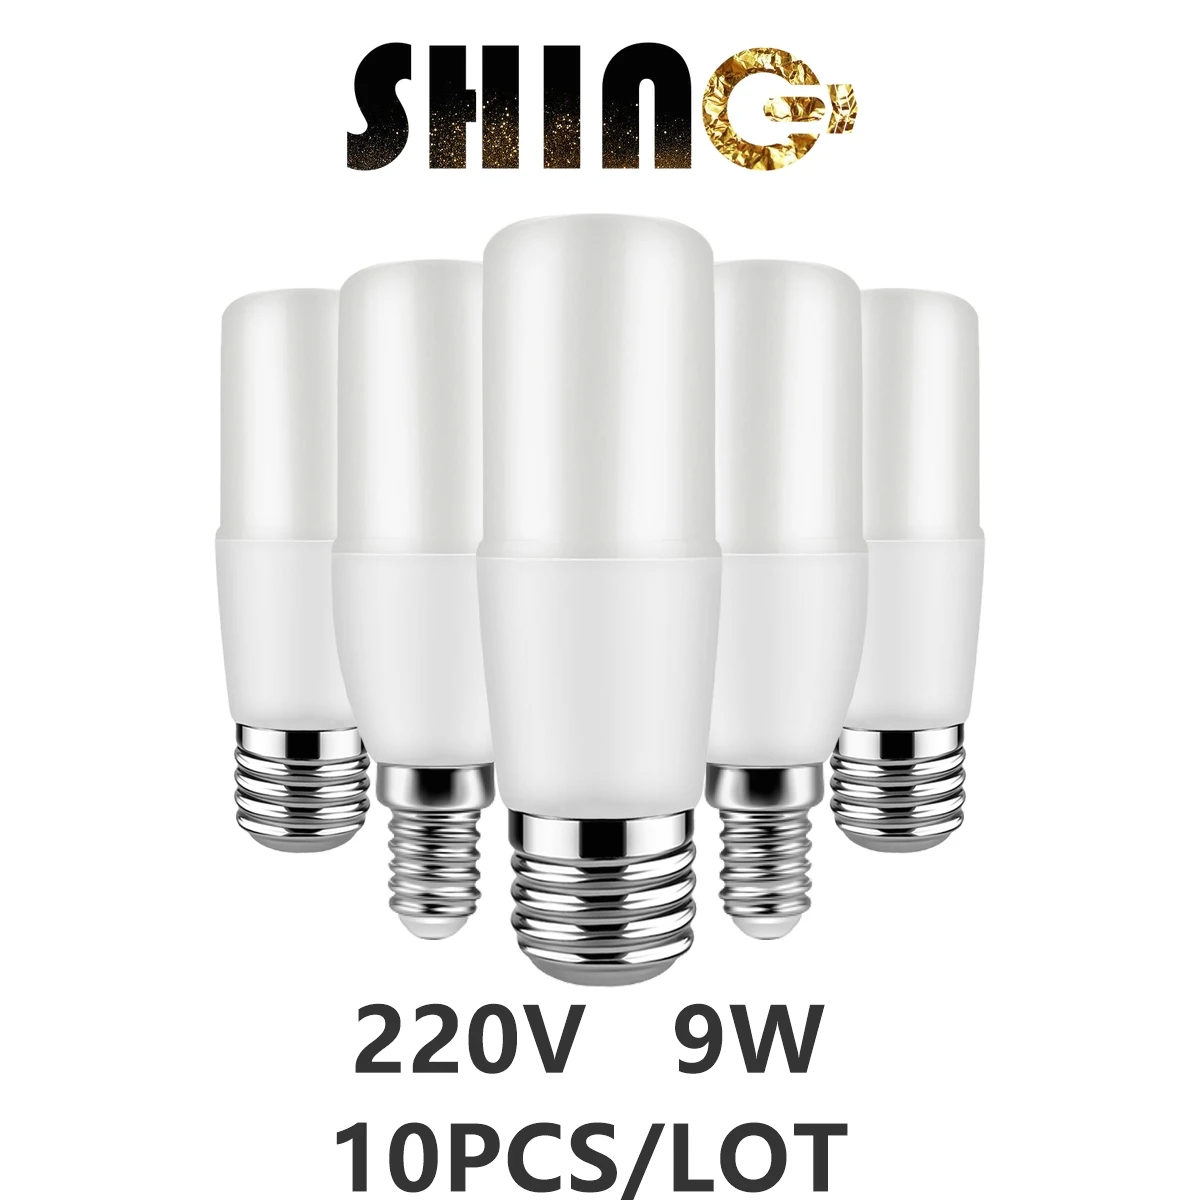 10pcs LED Cylindrical lights Bulb T37 9w AC220V E27 E14 Super Bright 3000K 4000K 6000K Lamp For Home Bedroom Office Decoration